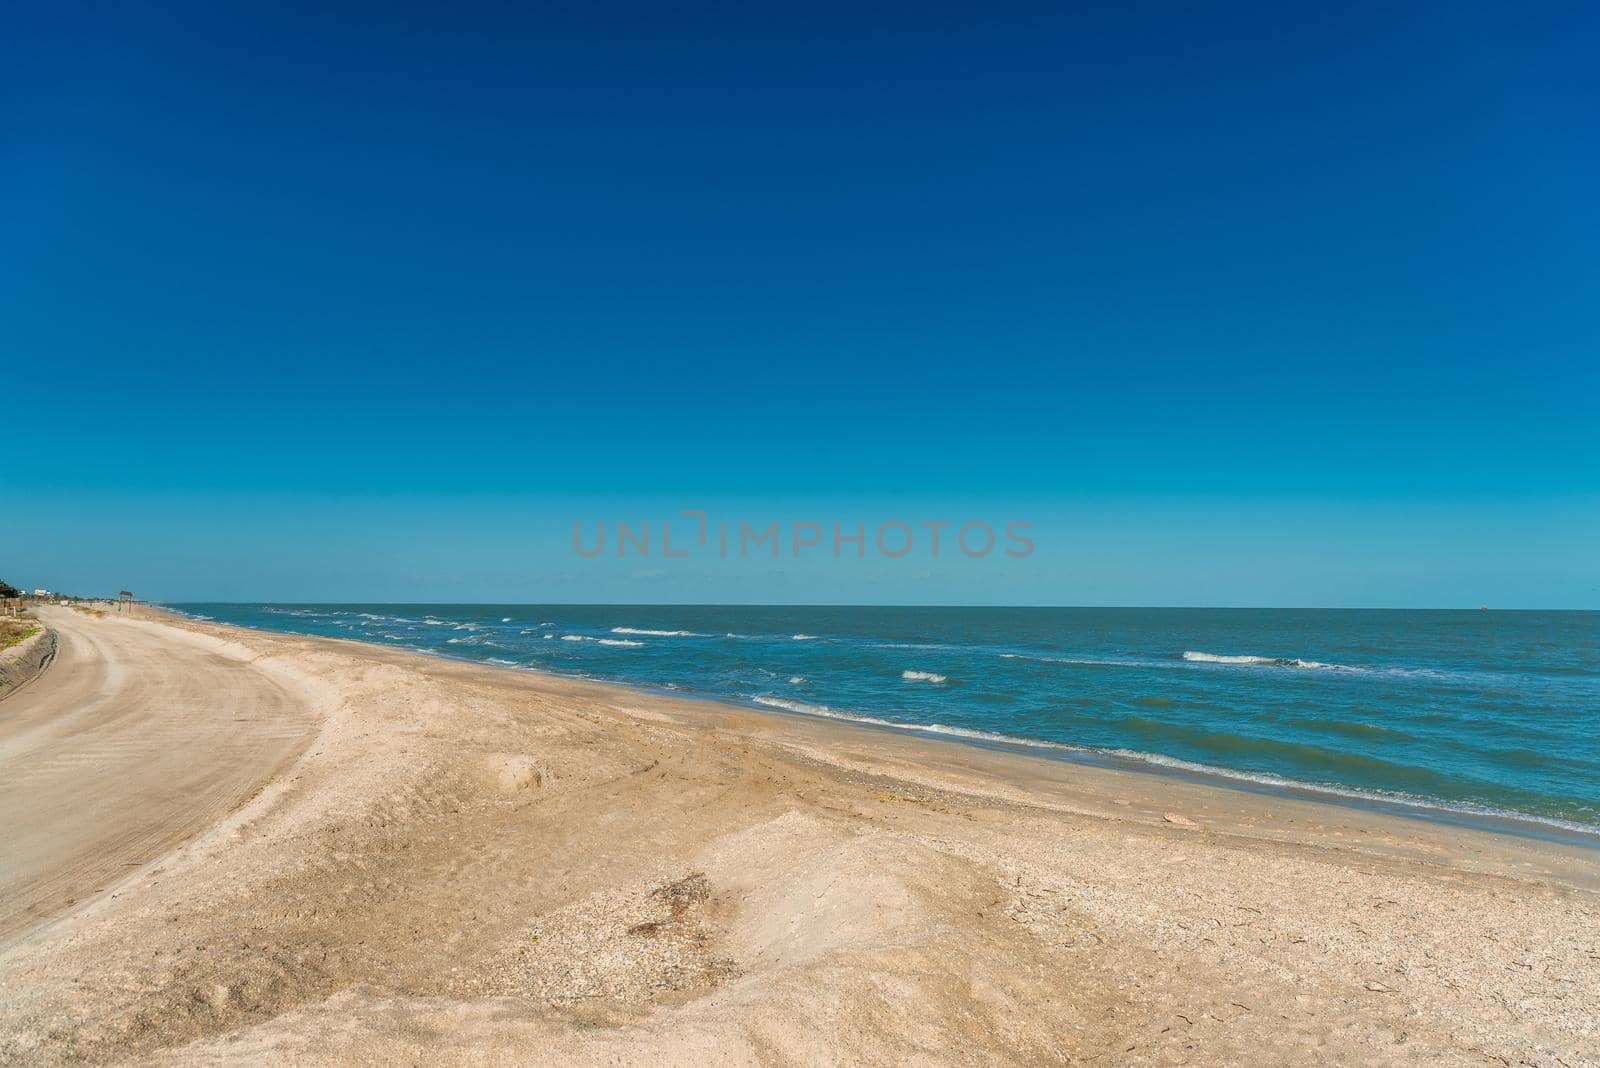 Beach on the Mexican Gulf. Sand, sea and sky.